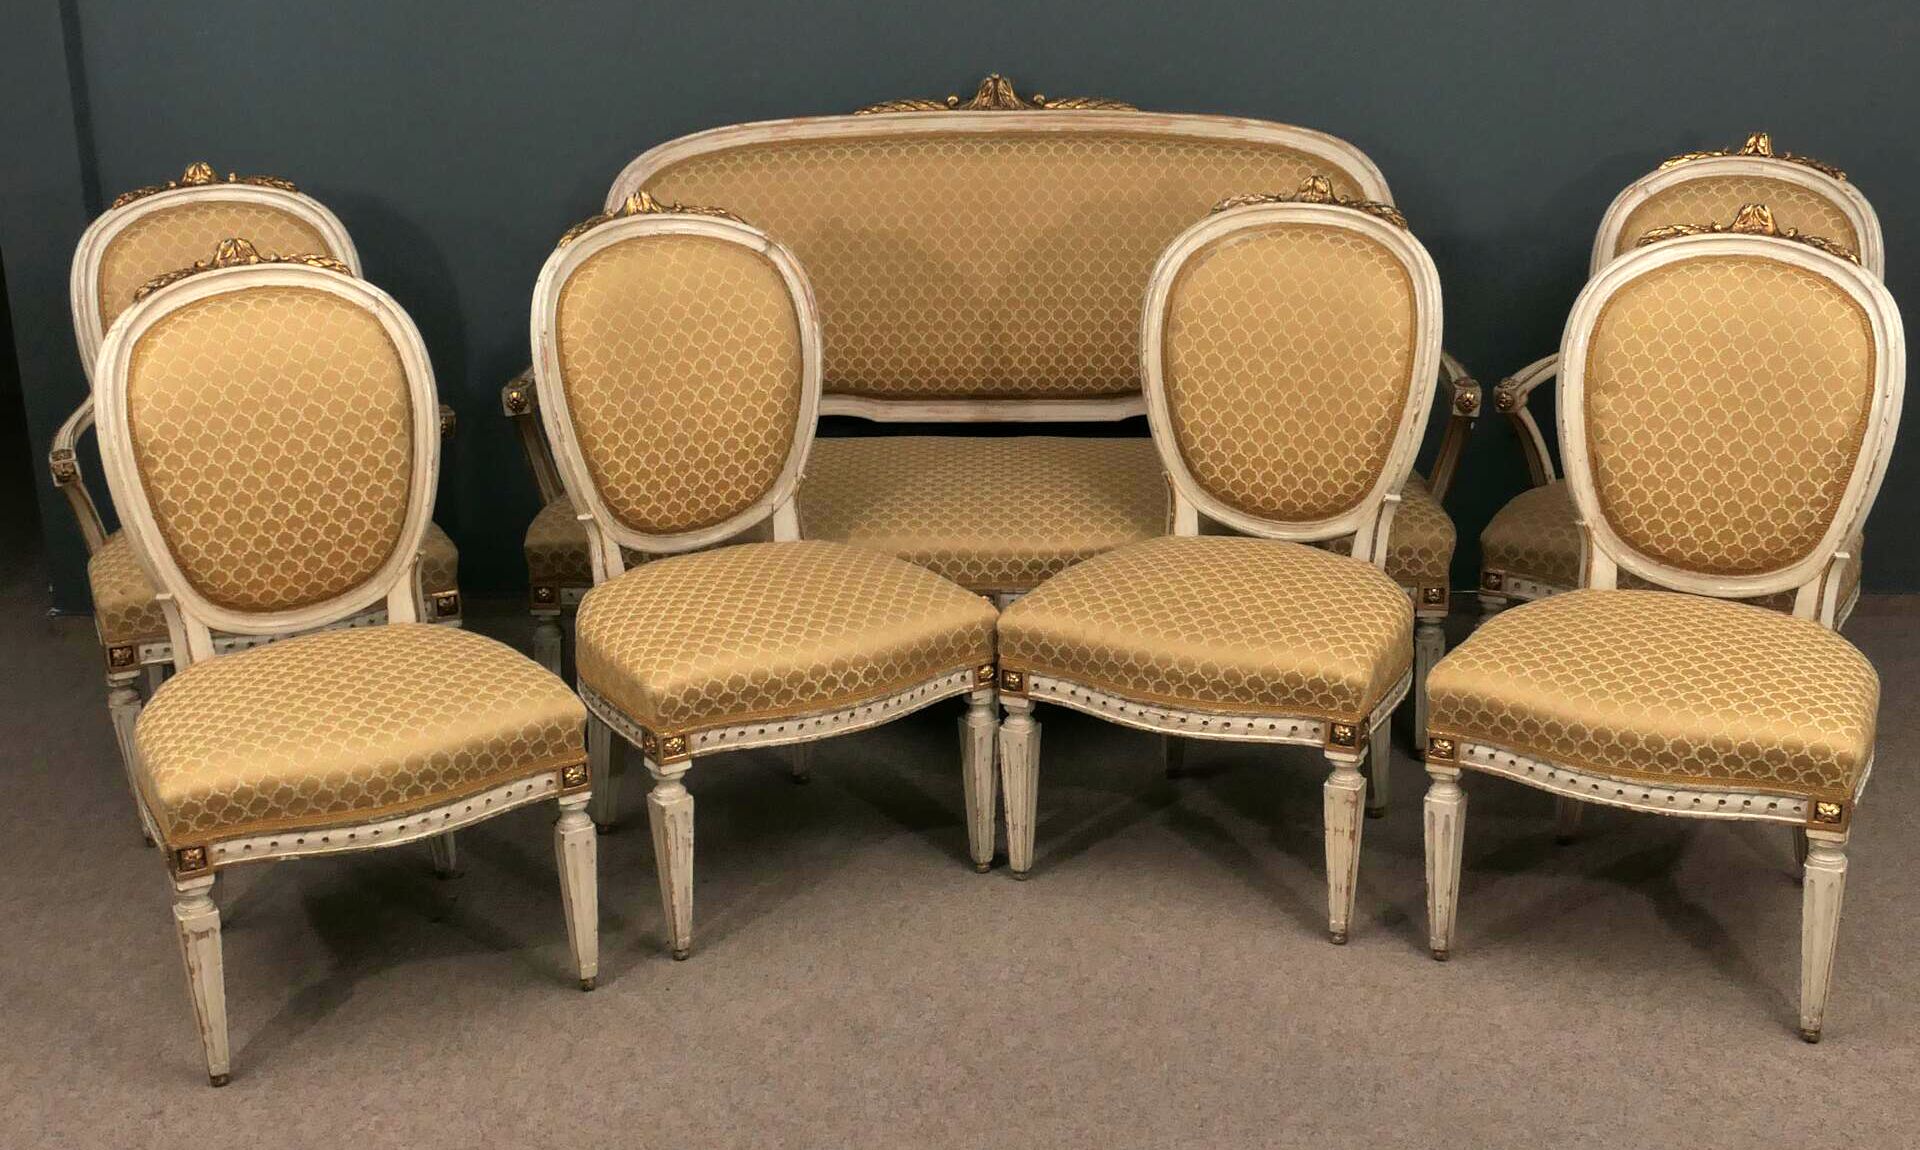 7 tlg. Ameublement, Stil Louis XVI, Ende 19. Jhd., weiß-gold gefasste Hartholzgestelle, intaktes Po